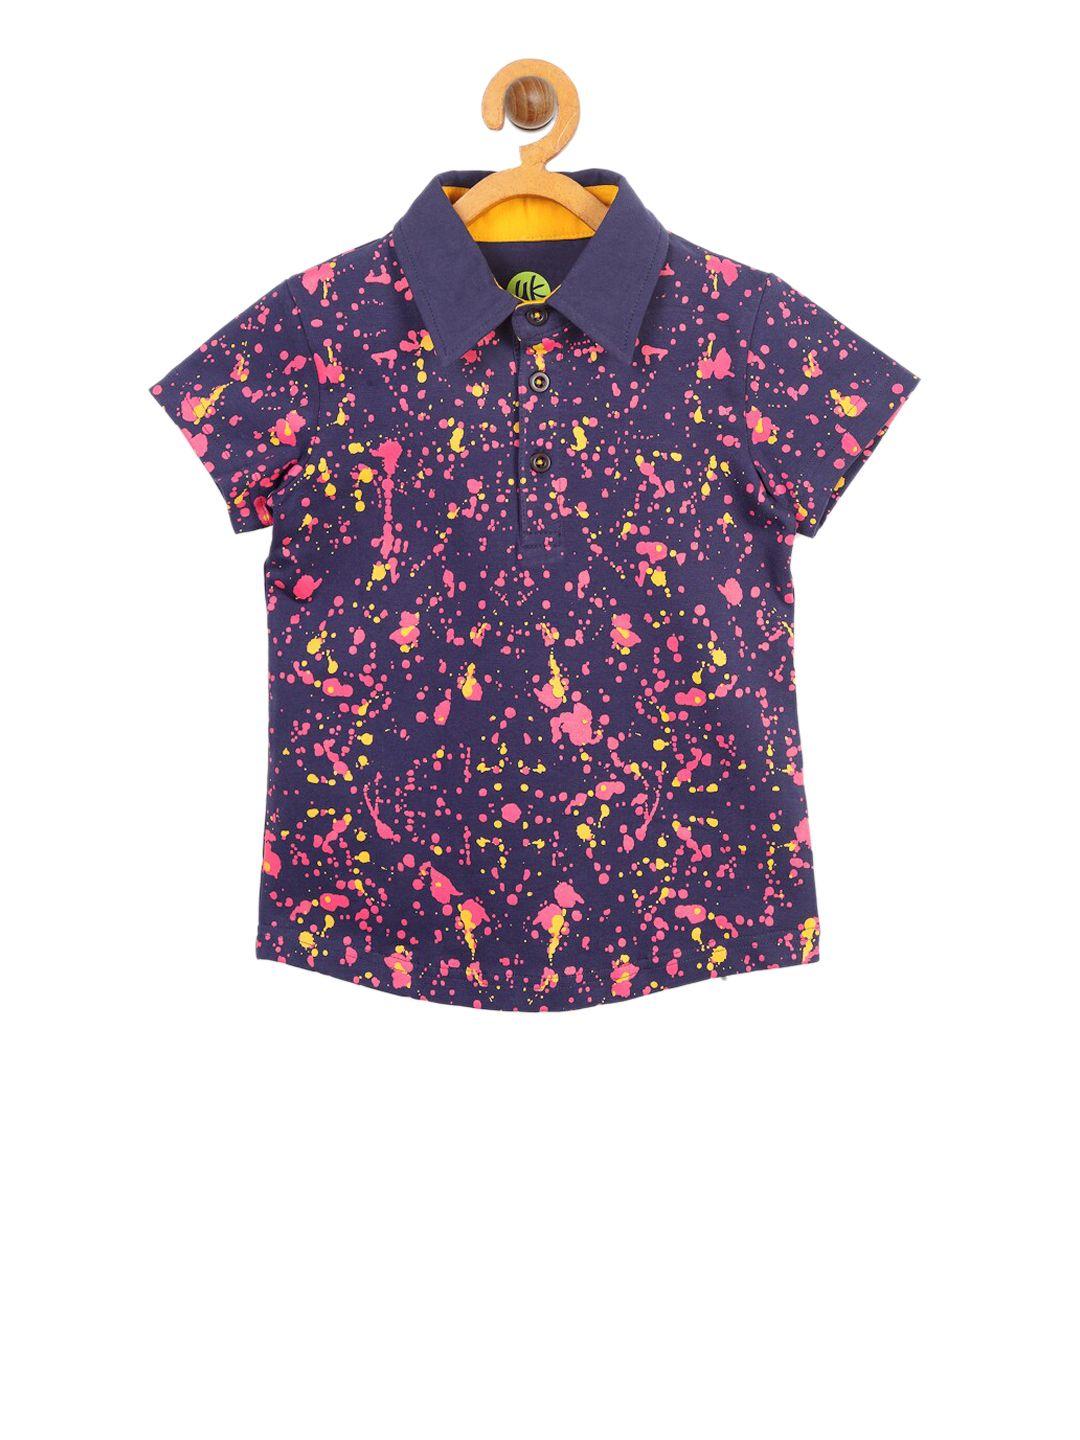 yk boys navy blue & pink printed polo collar t-shirt